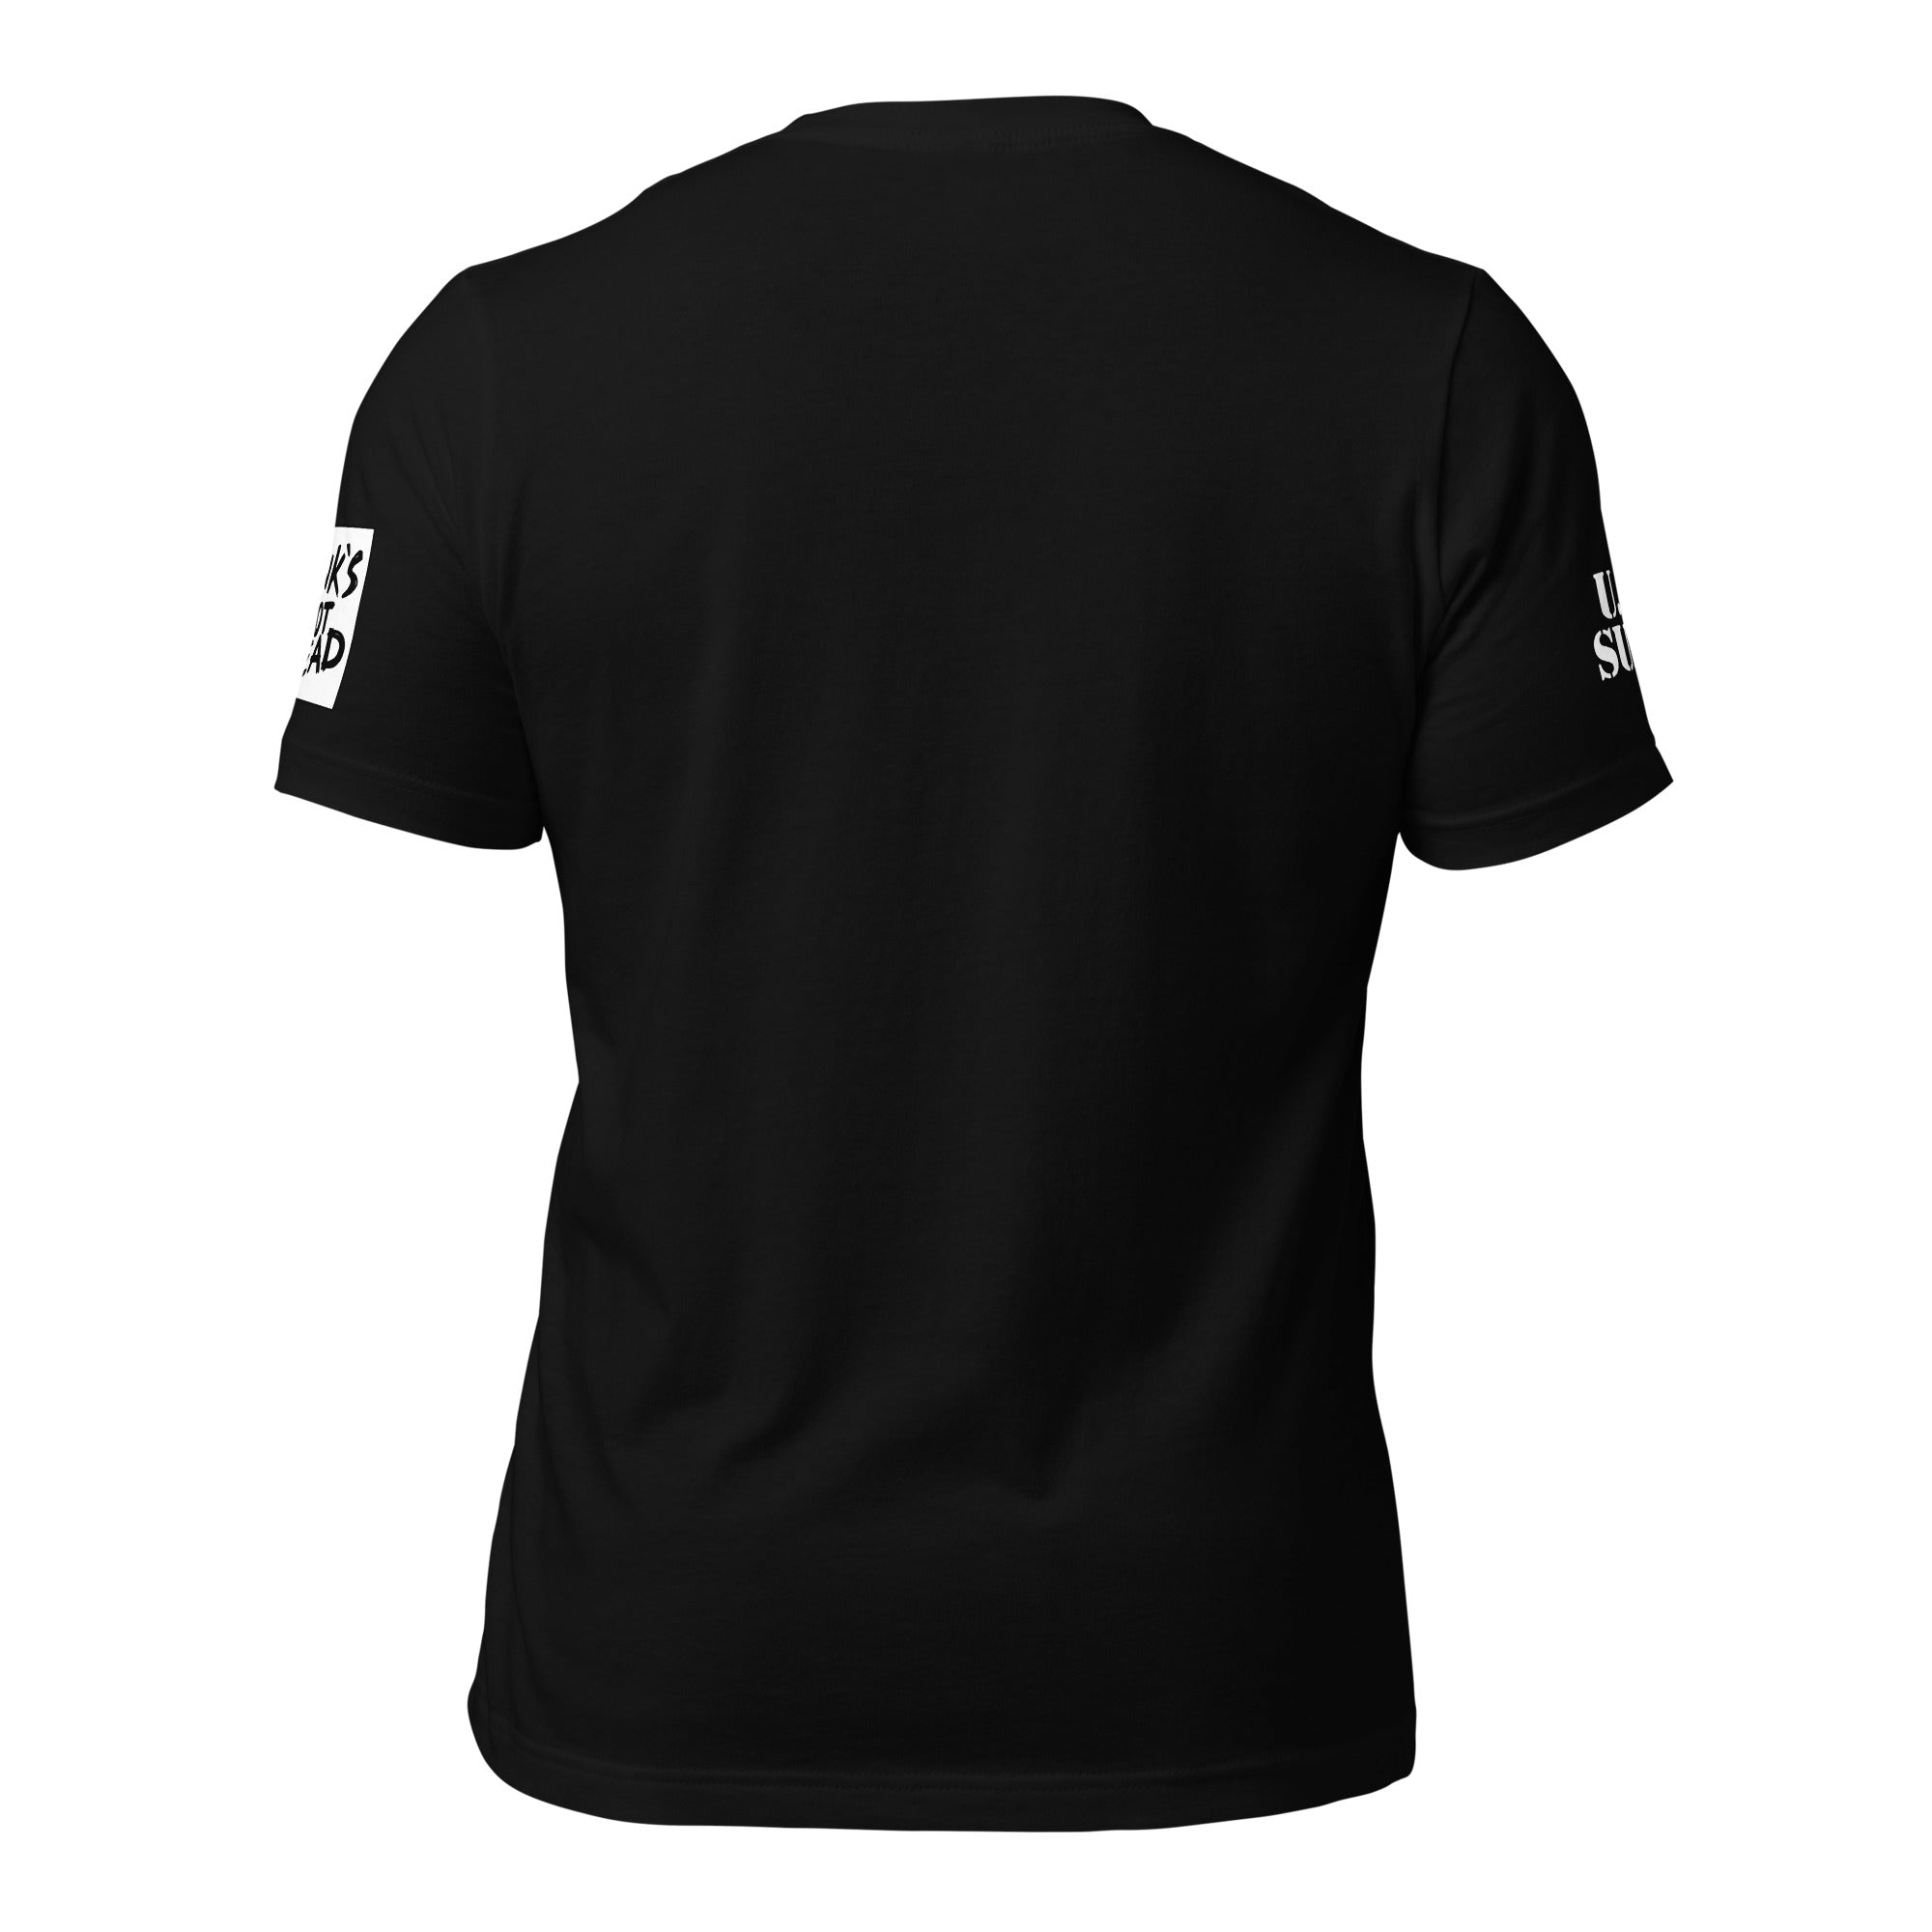 Unisex Crew Neck T-Shirt - Punk Rock Series Sector 14 - GRAPHIC T-SHIRTS